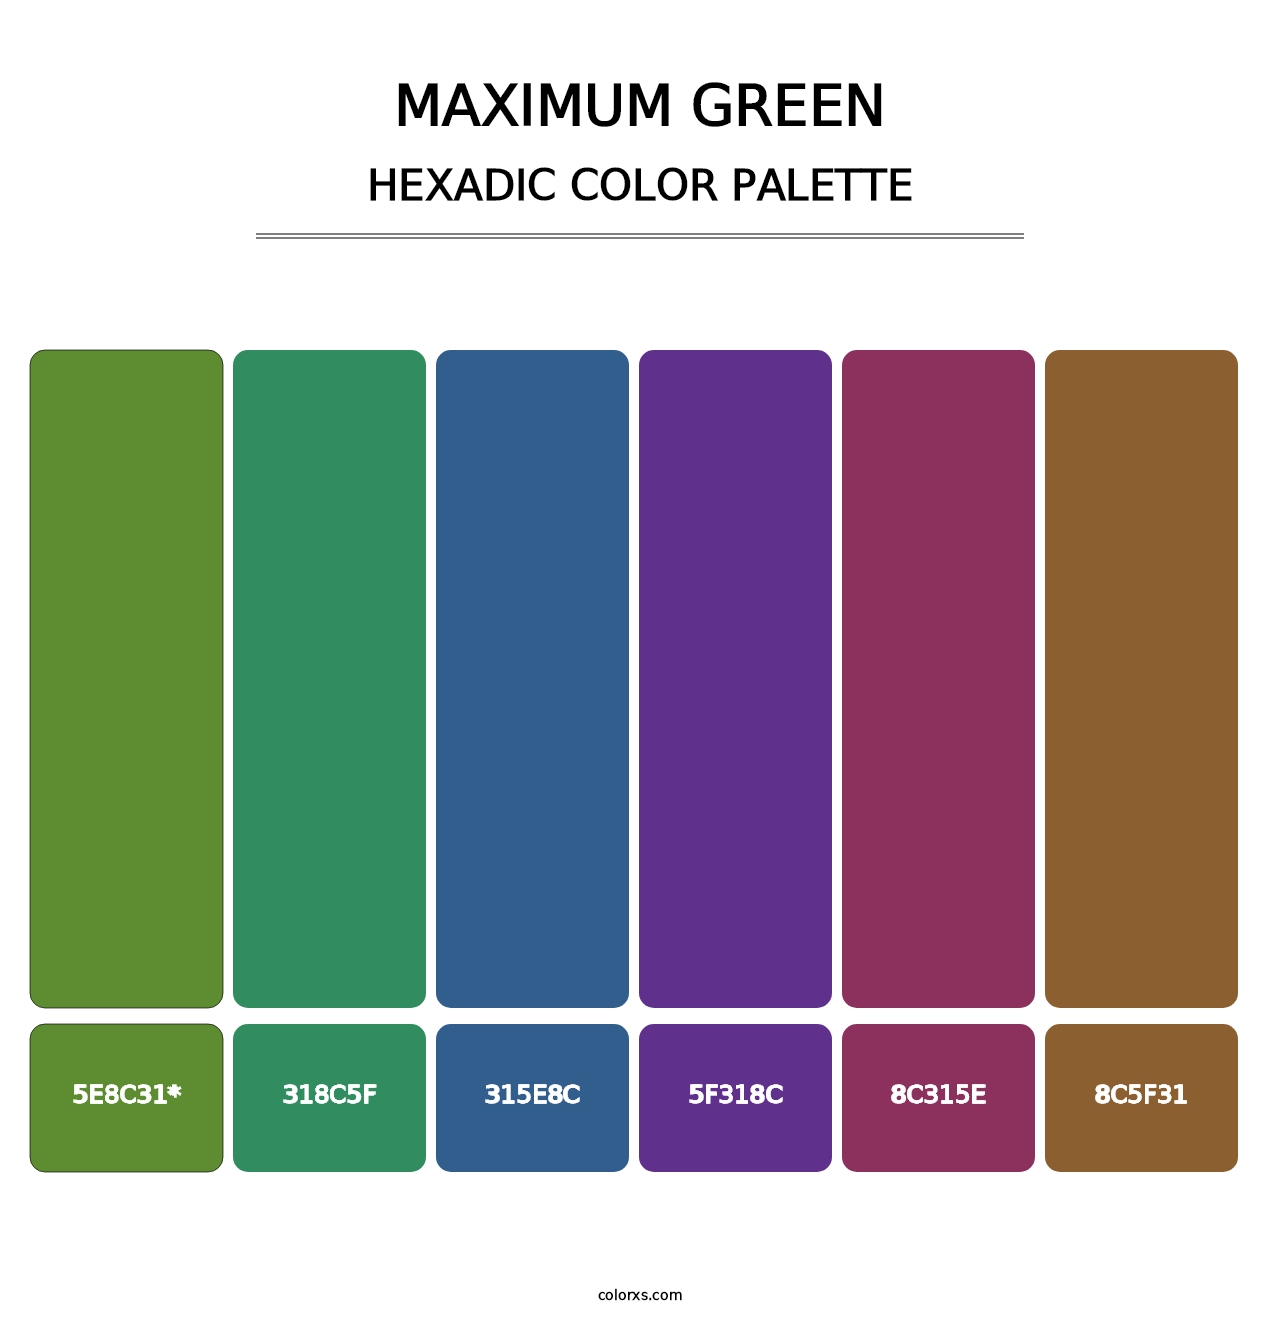 Maximum Green - Hexadic Color Palette